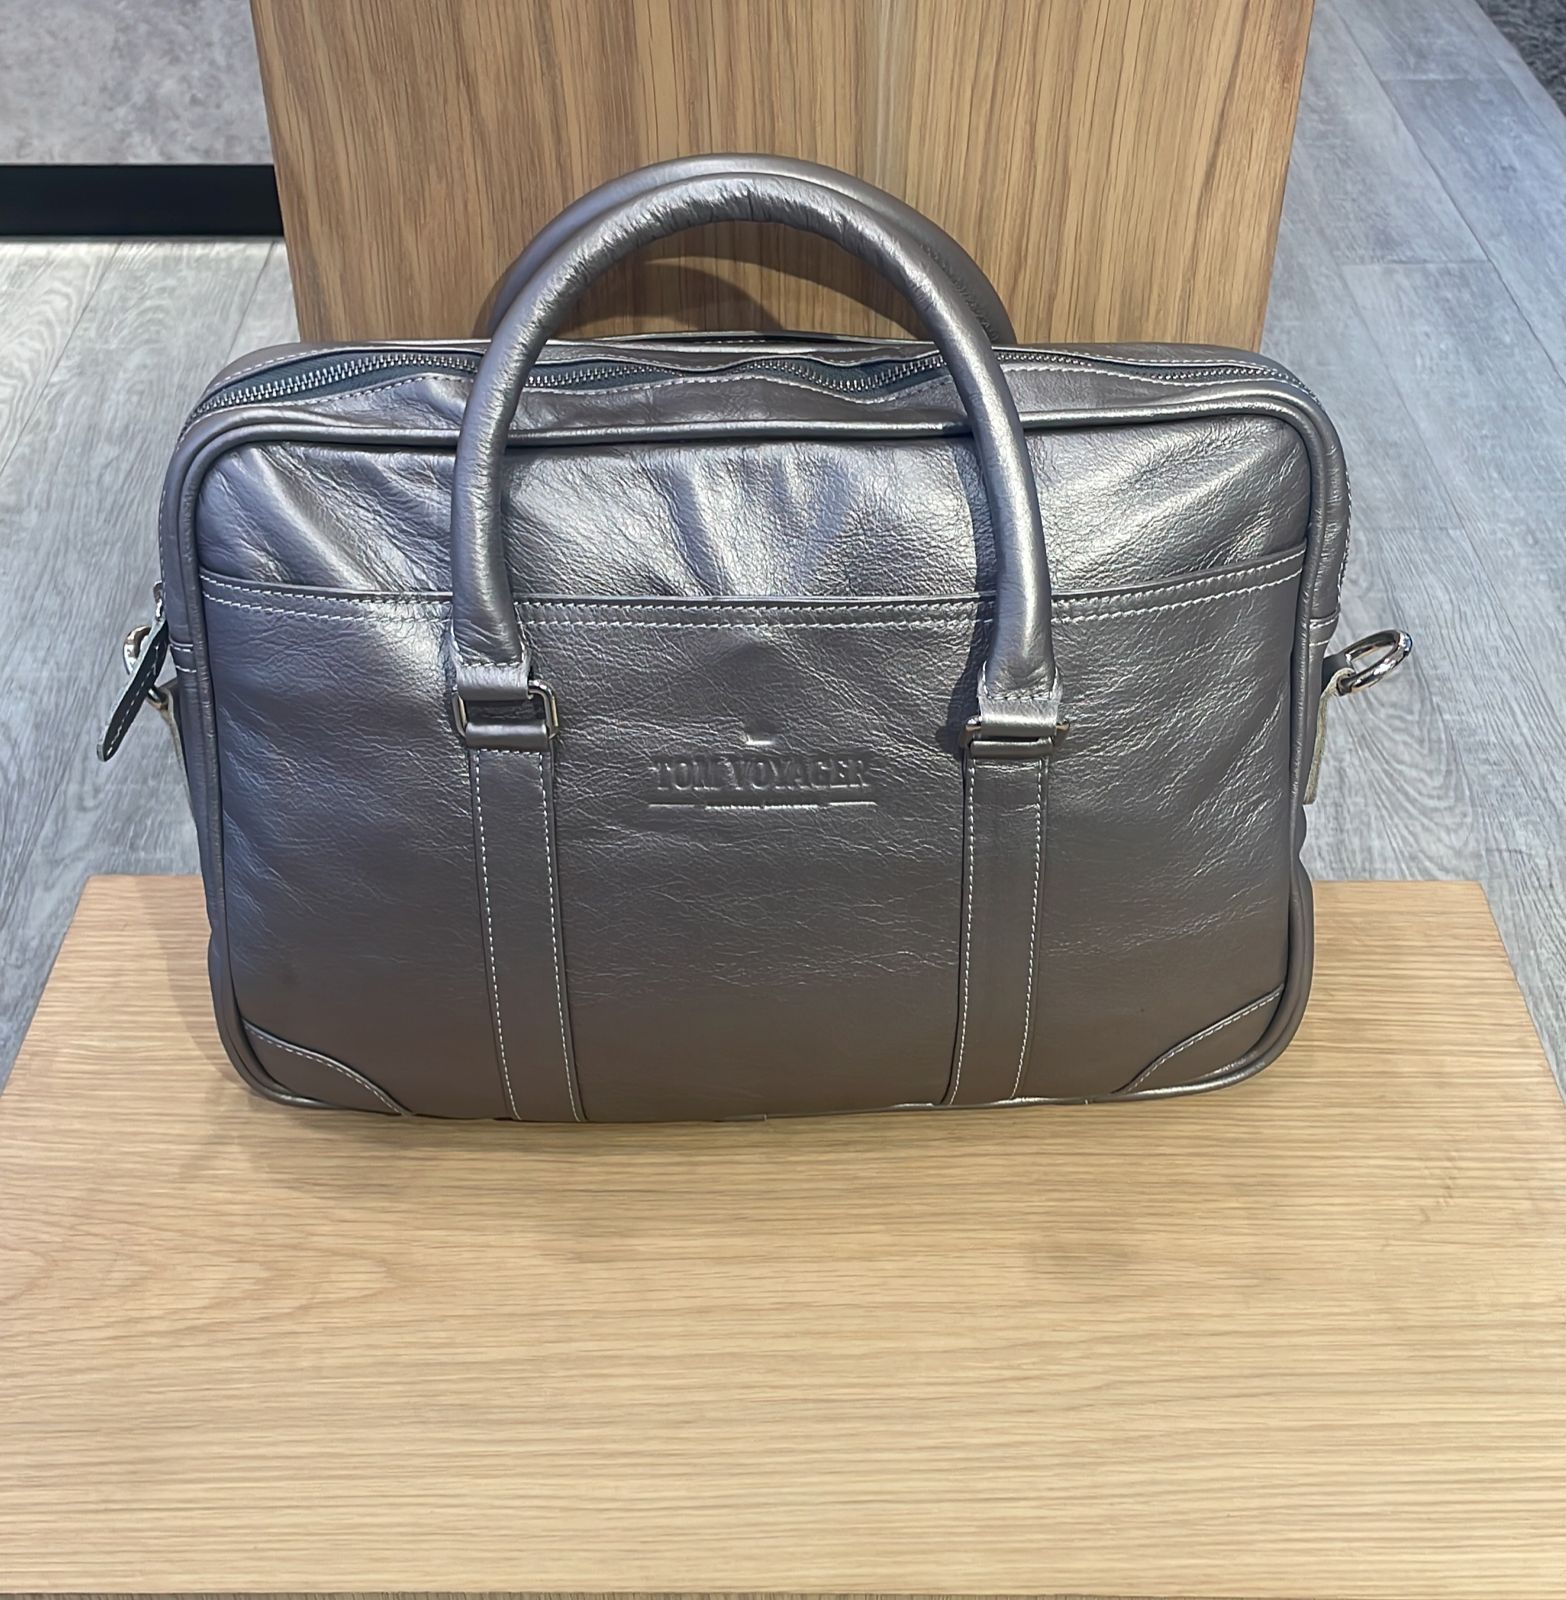 Hayden Leather Bag - Silver Grey